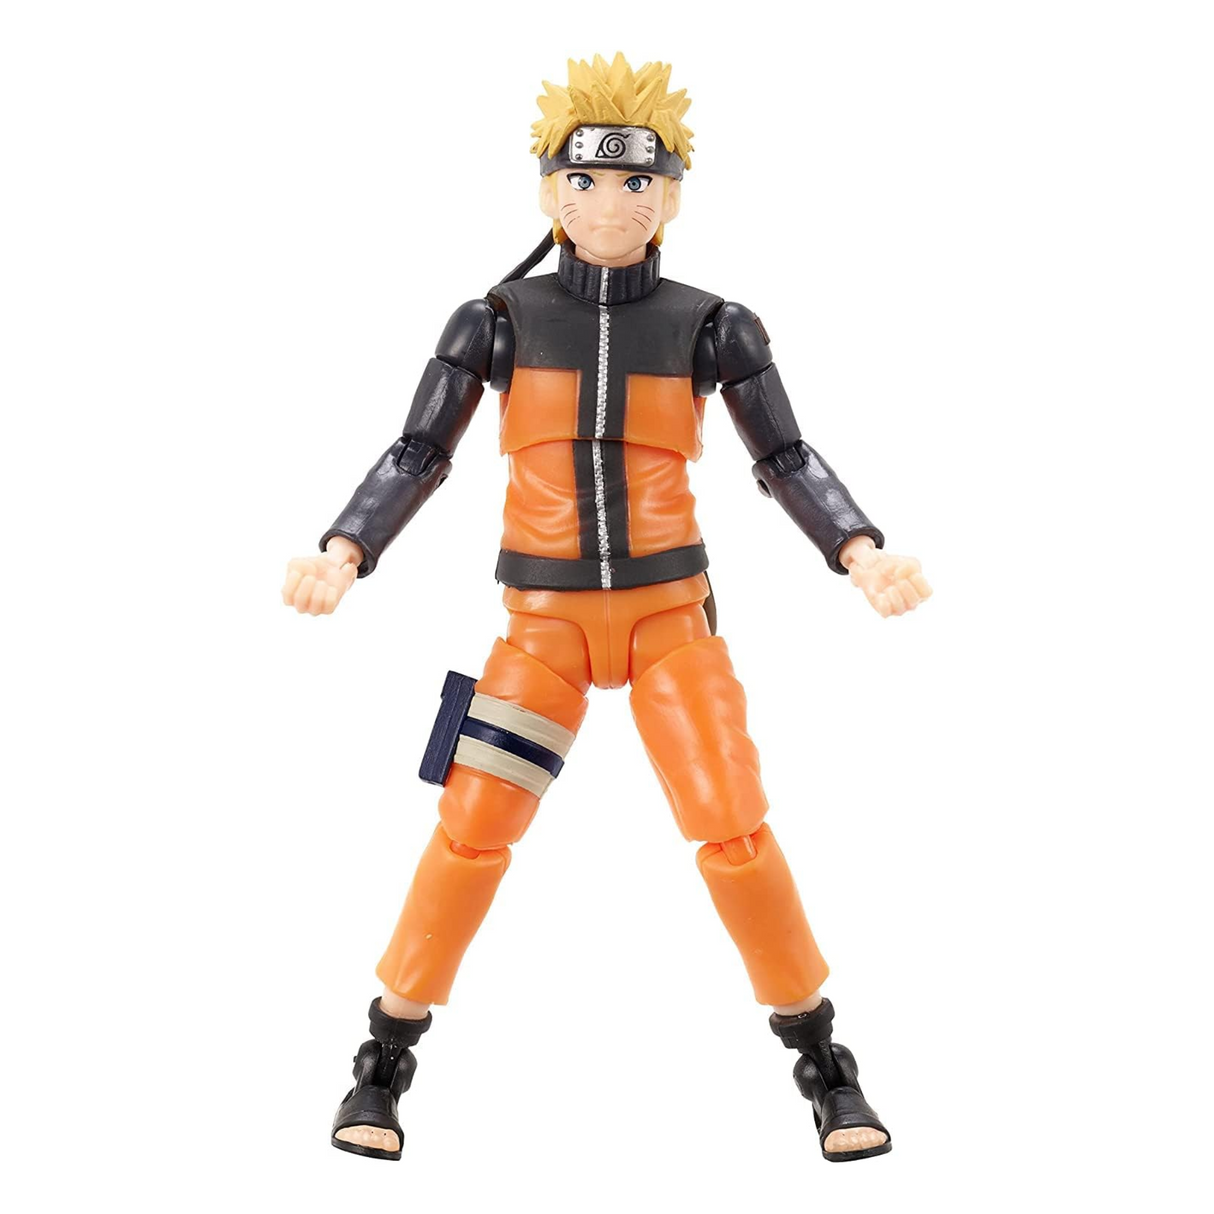 Bandai Ultimate Legends Naruto Action Figure